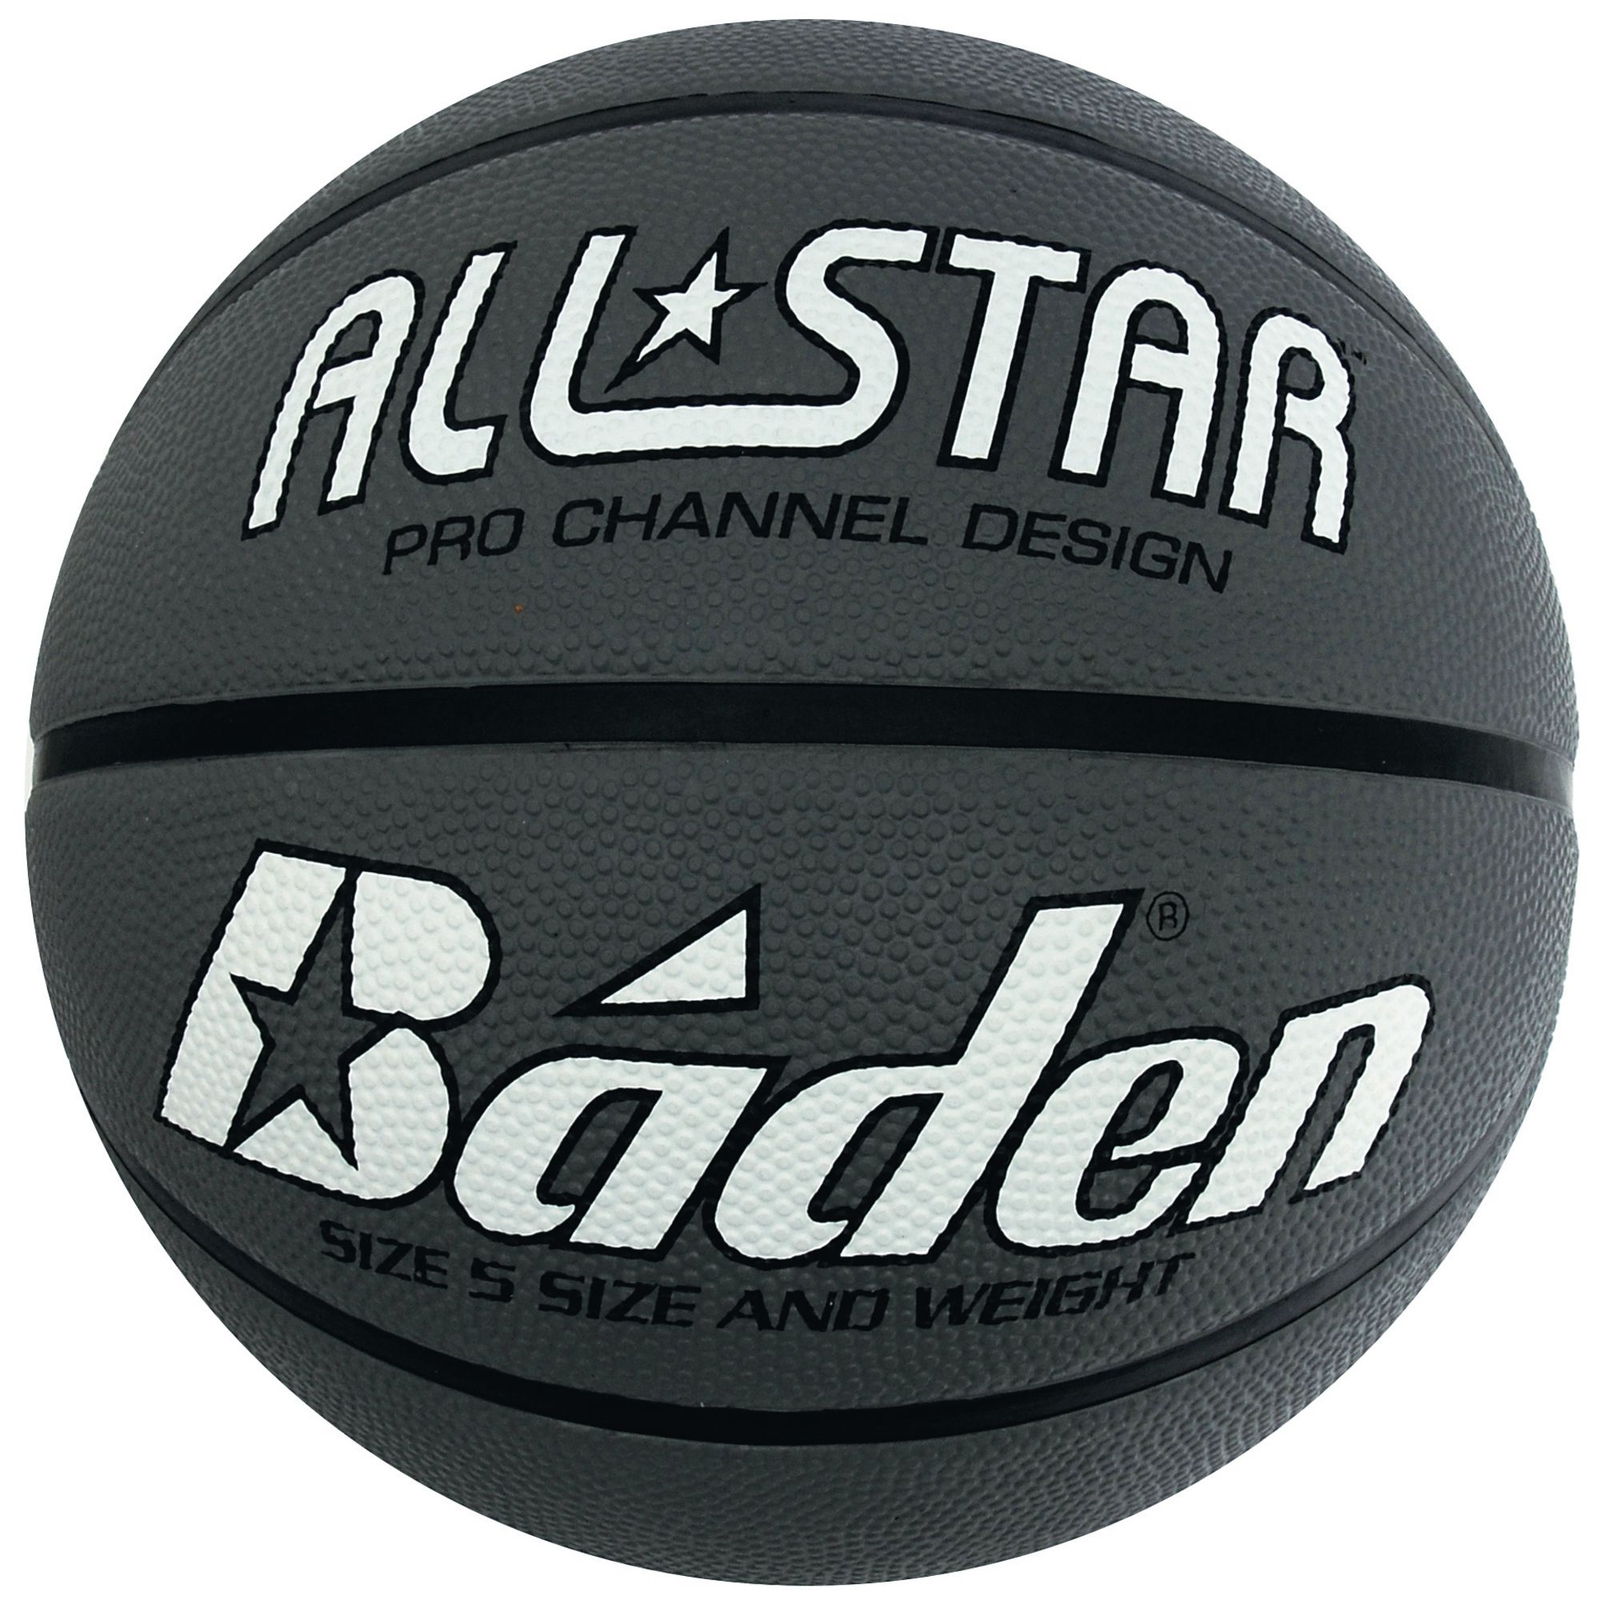 Baden All Star Basketball - Size 5 - Silver/Black